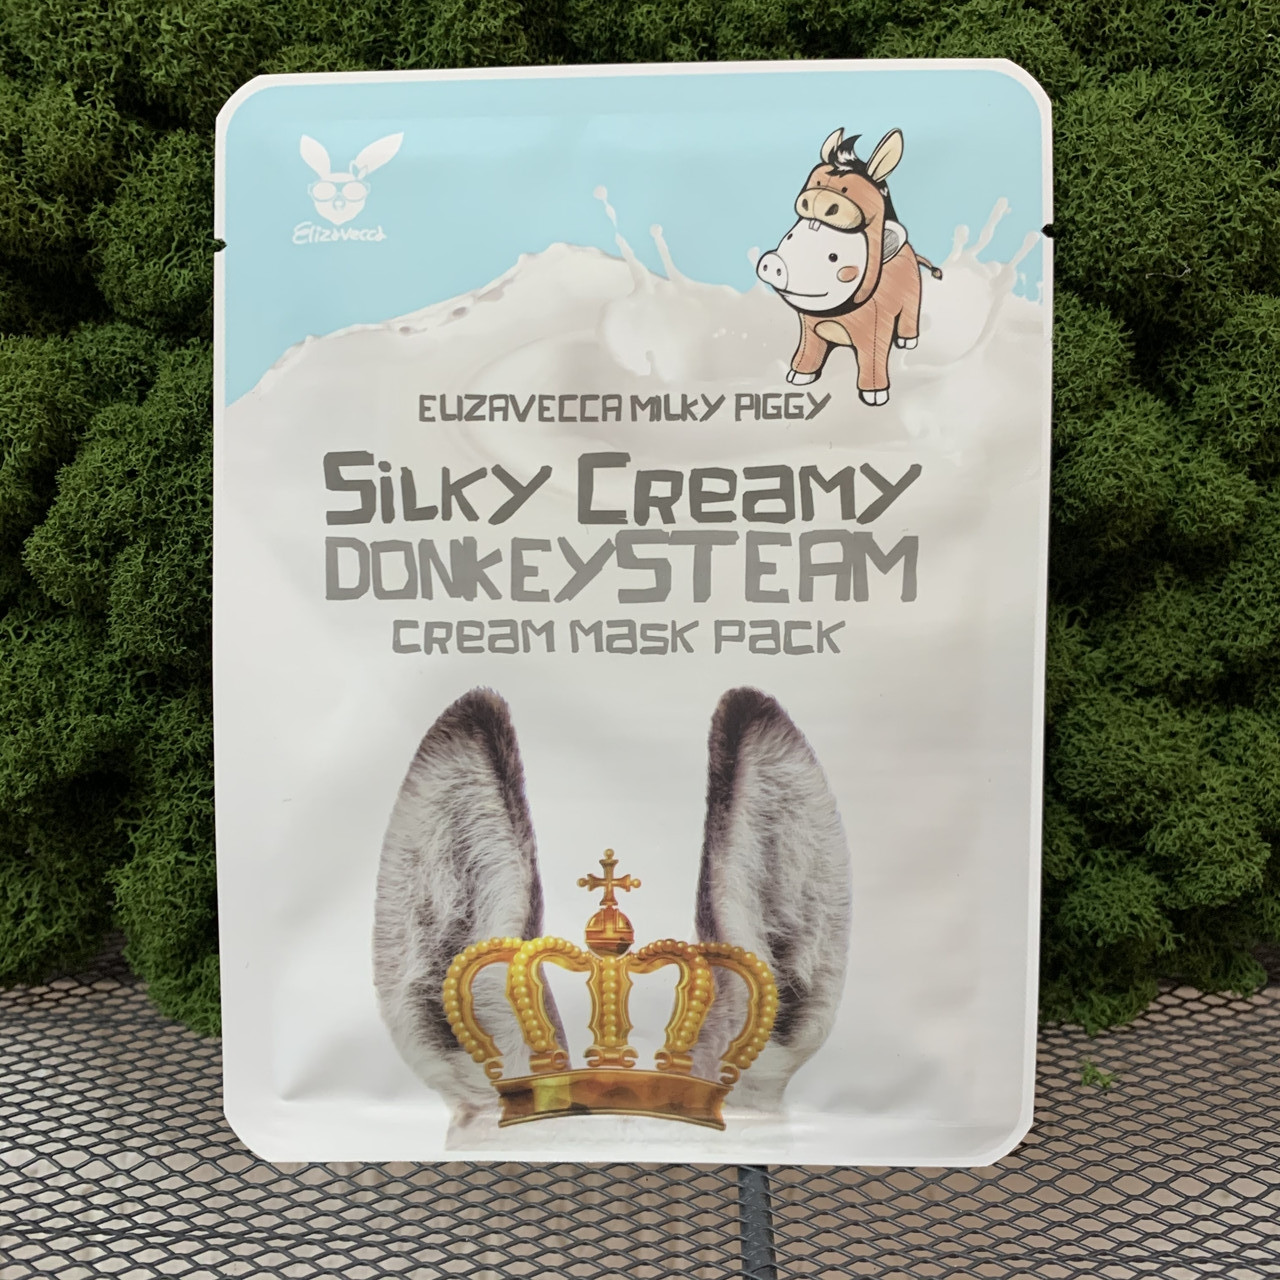 Silky cream donkey steam cream mask фото 7